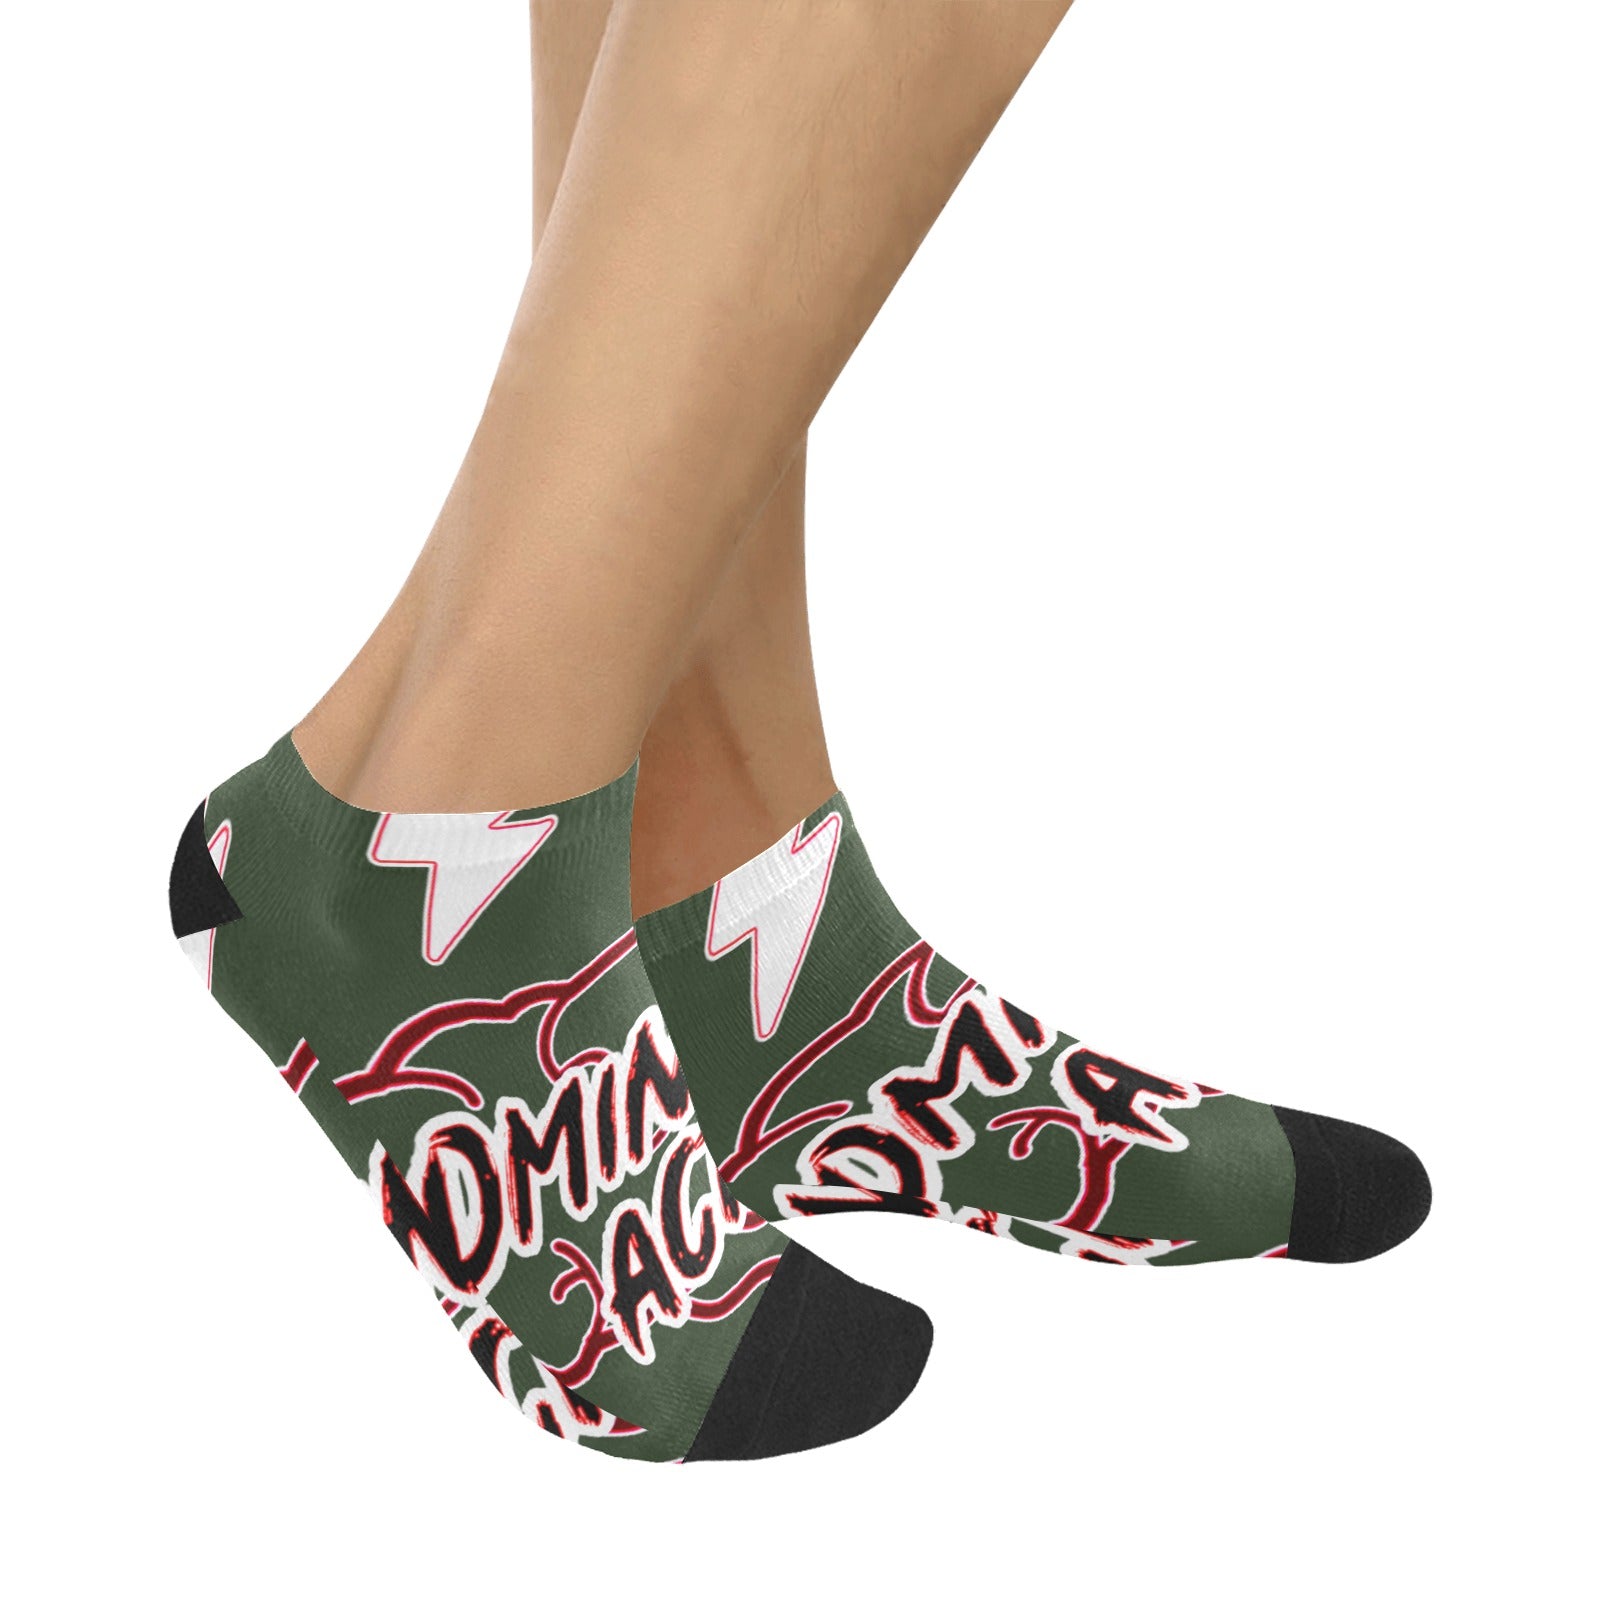 fz men's mind ankle socks one size / fz mind socks - dark green men's ankle socks